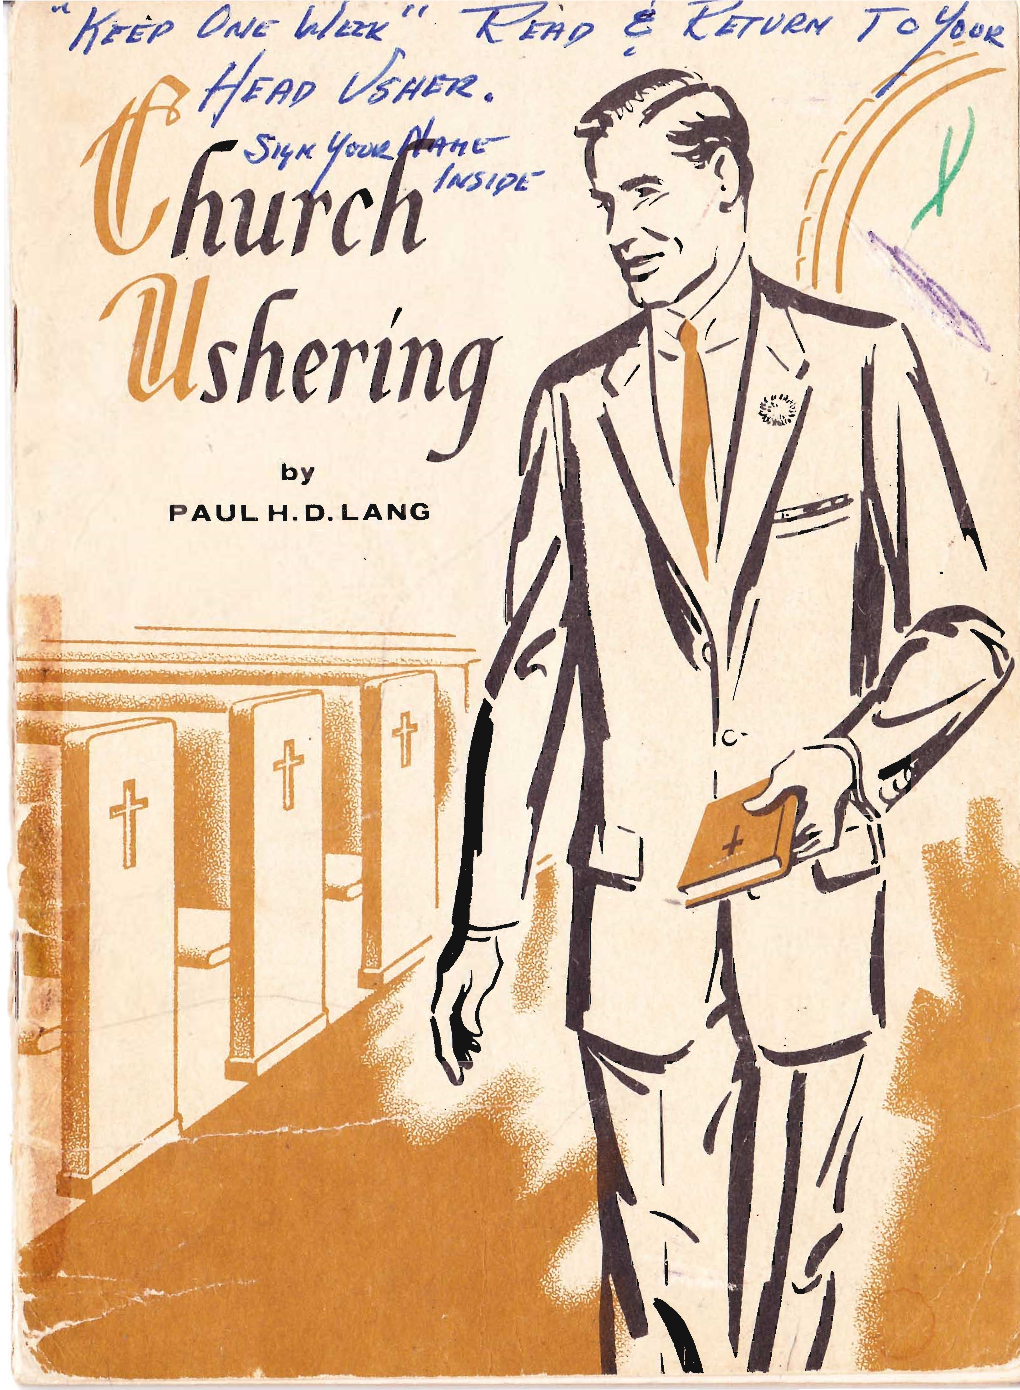 Church Ushering, St